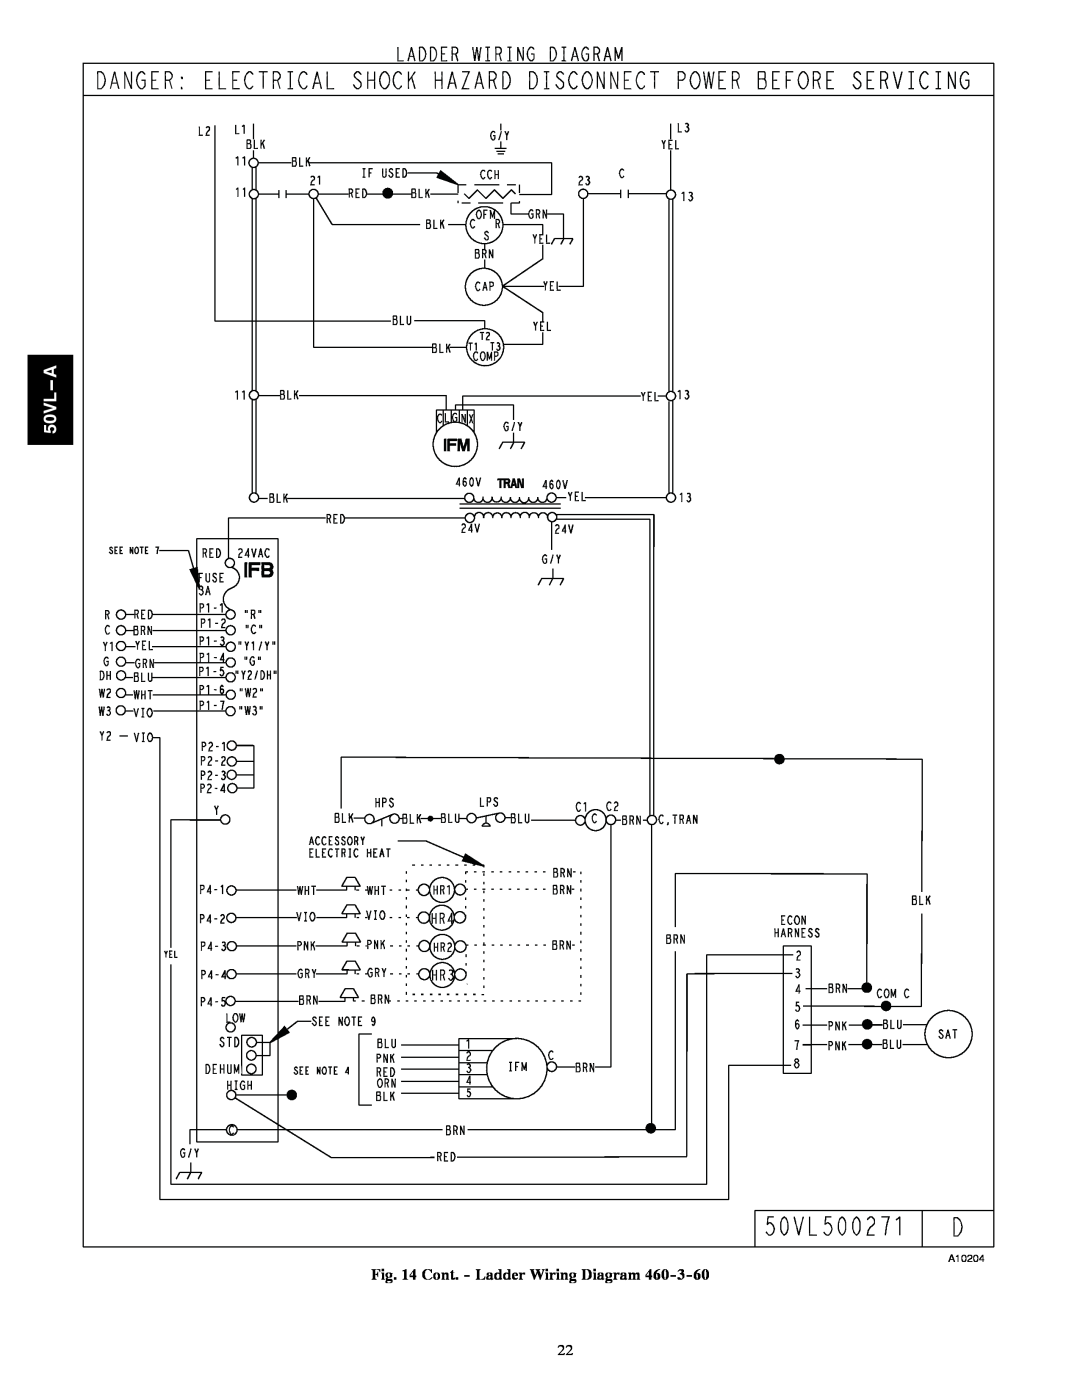 Carrier 50VL---A installation instructions 50VL500271, 50VL--A, Ladderwiring Diagram, Cont. - Ladder Wiring Diagram, Dehum 